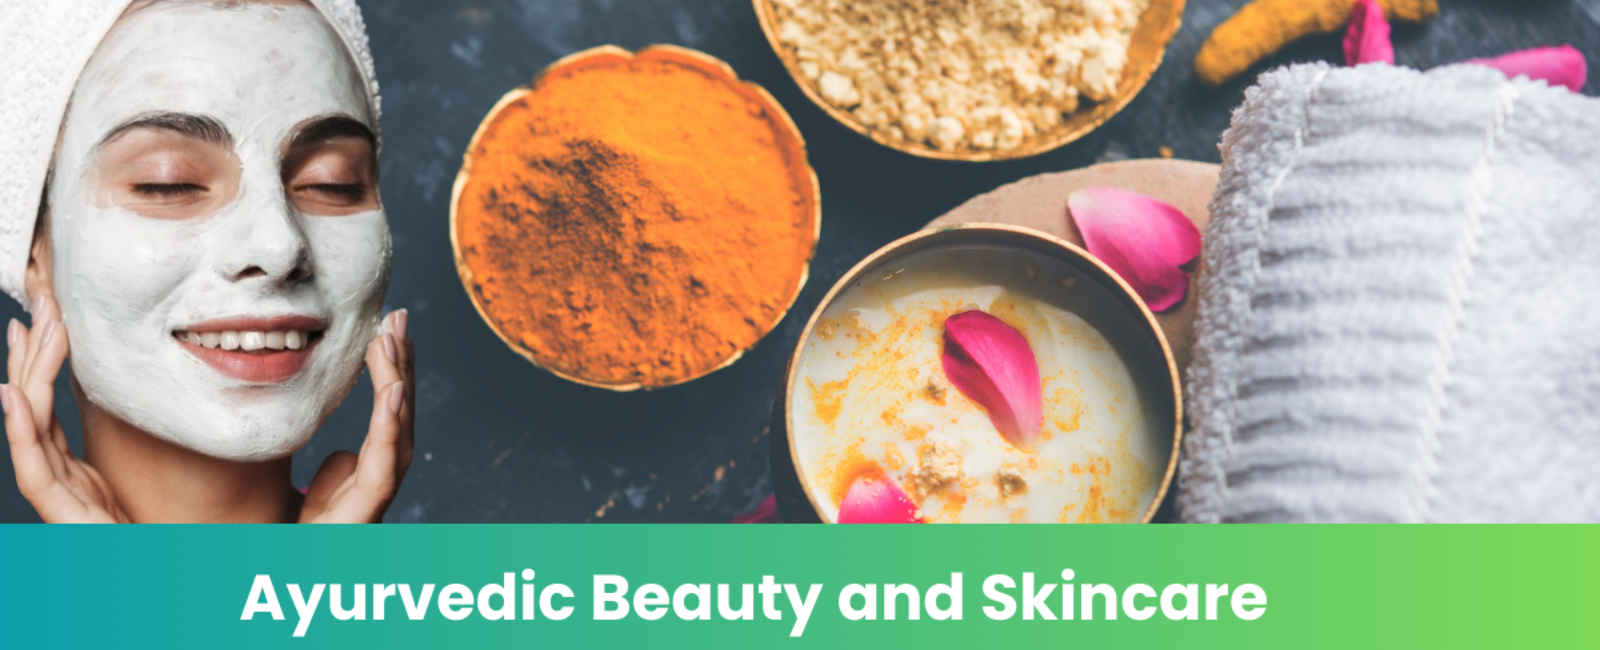 Ayurvedic Beauty and Skincare